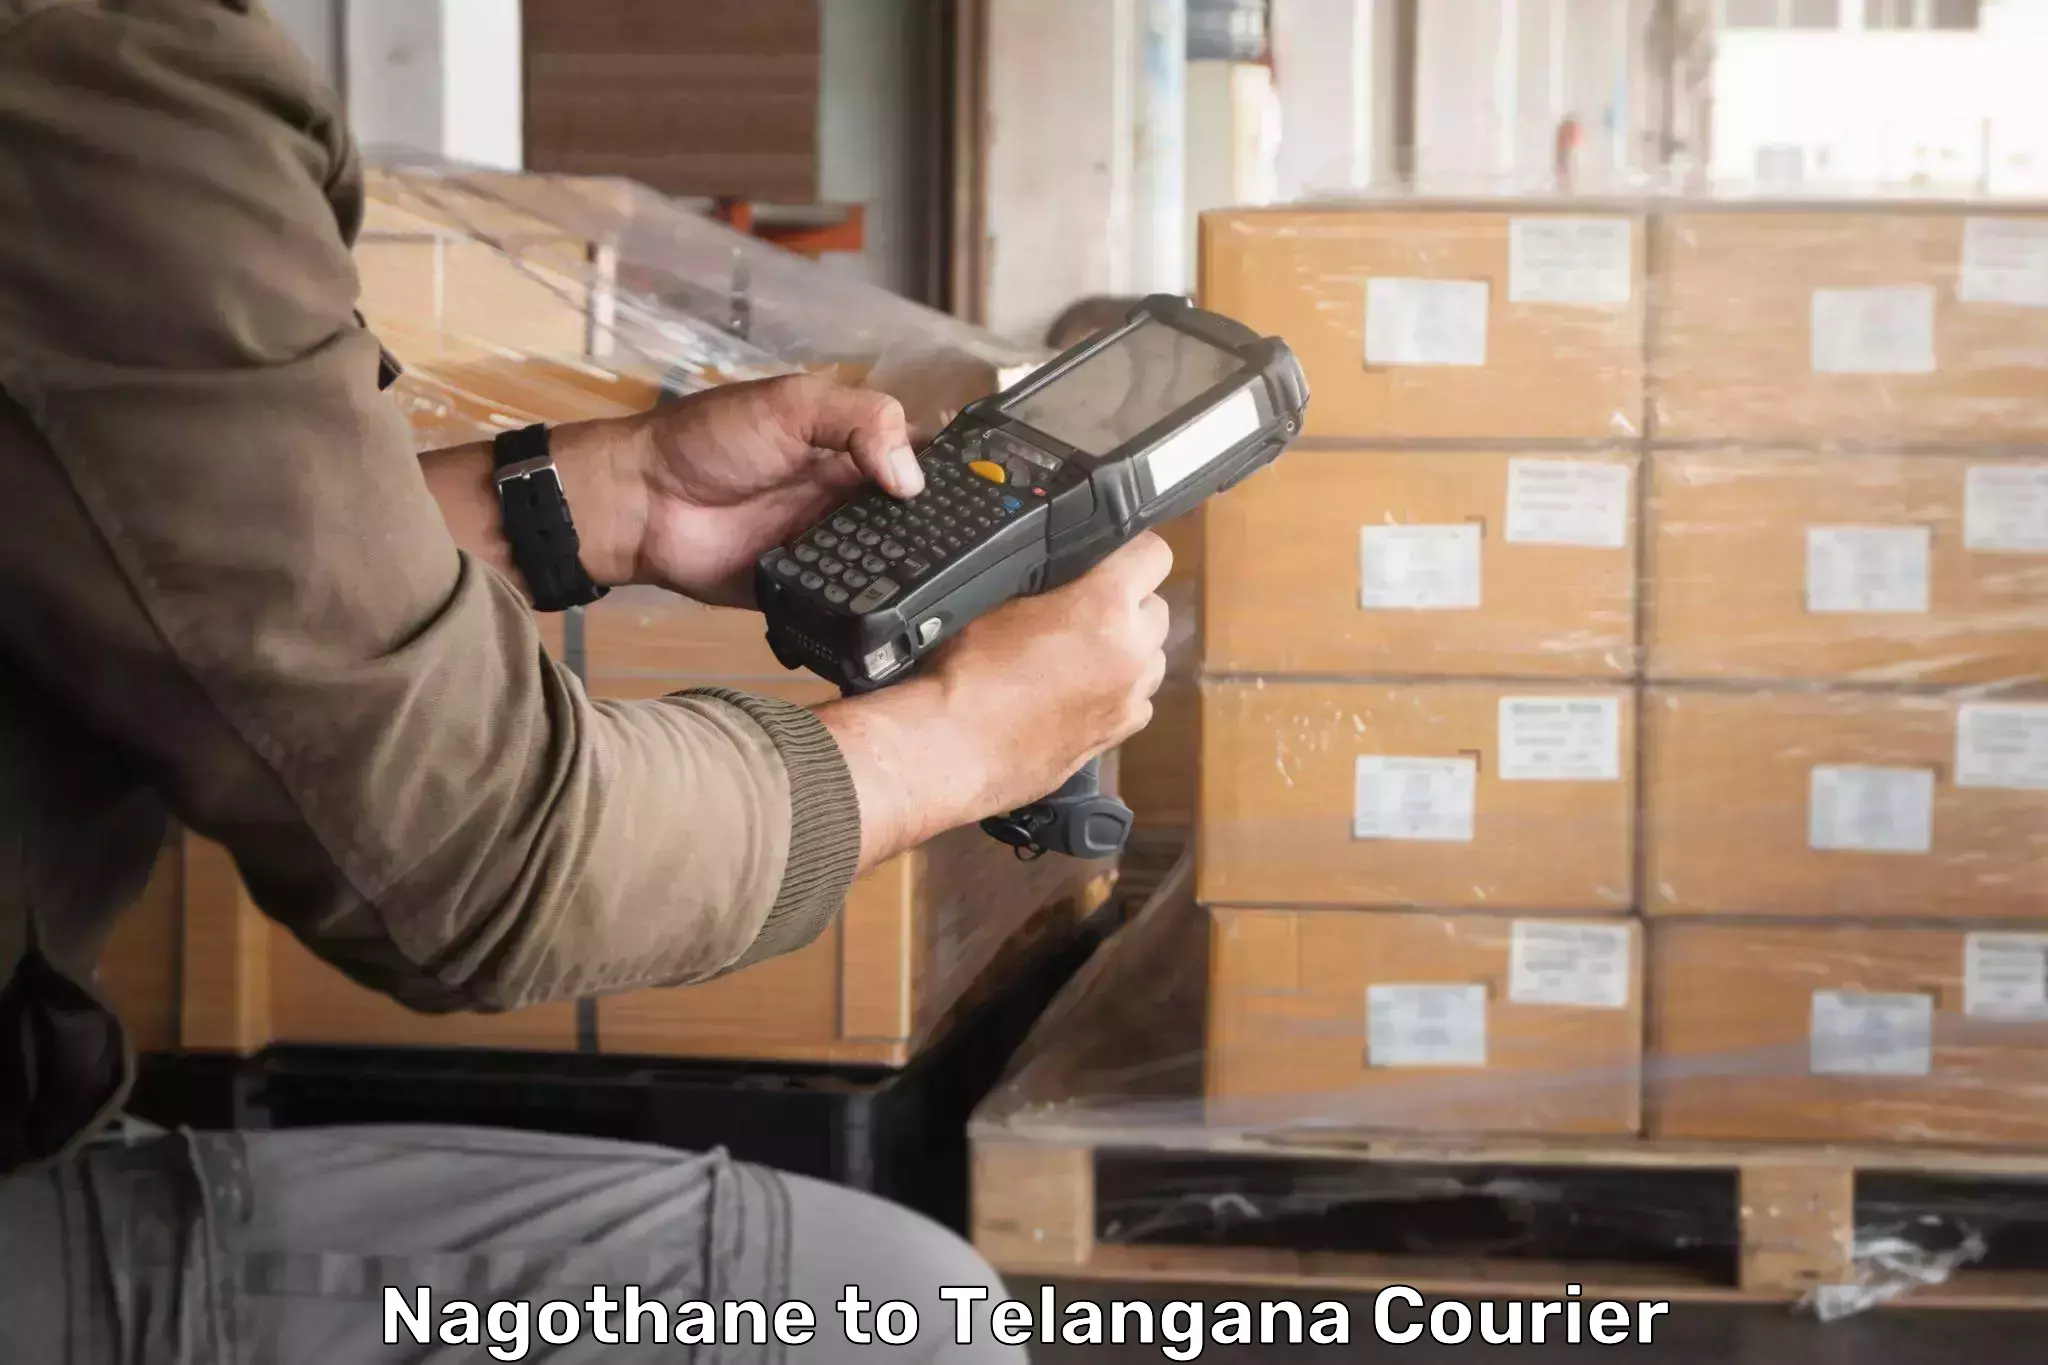 Courier service innovation Nagothane to Patancheru